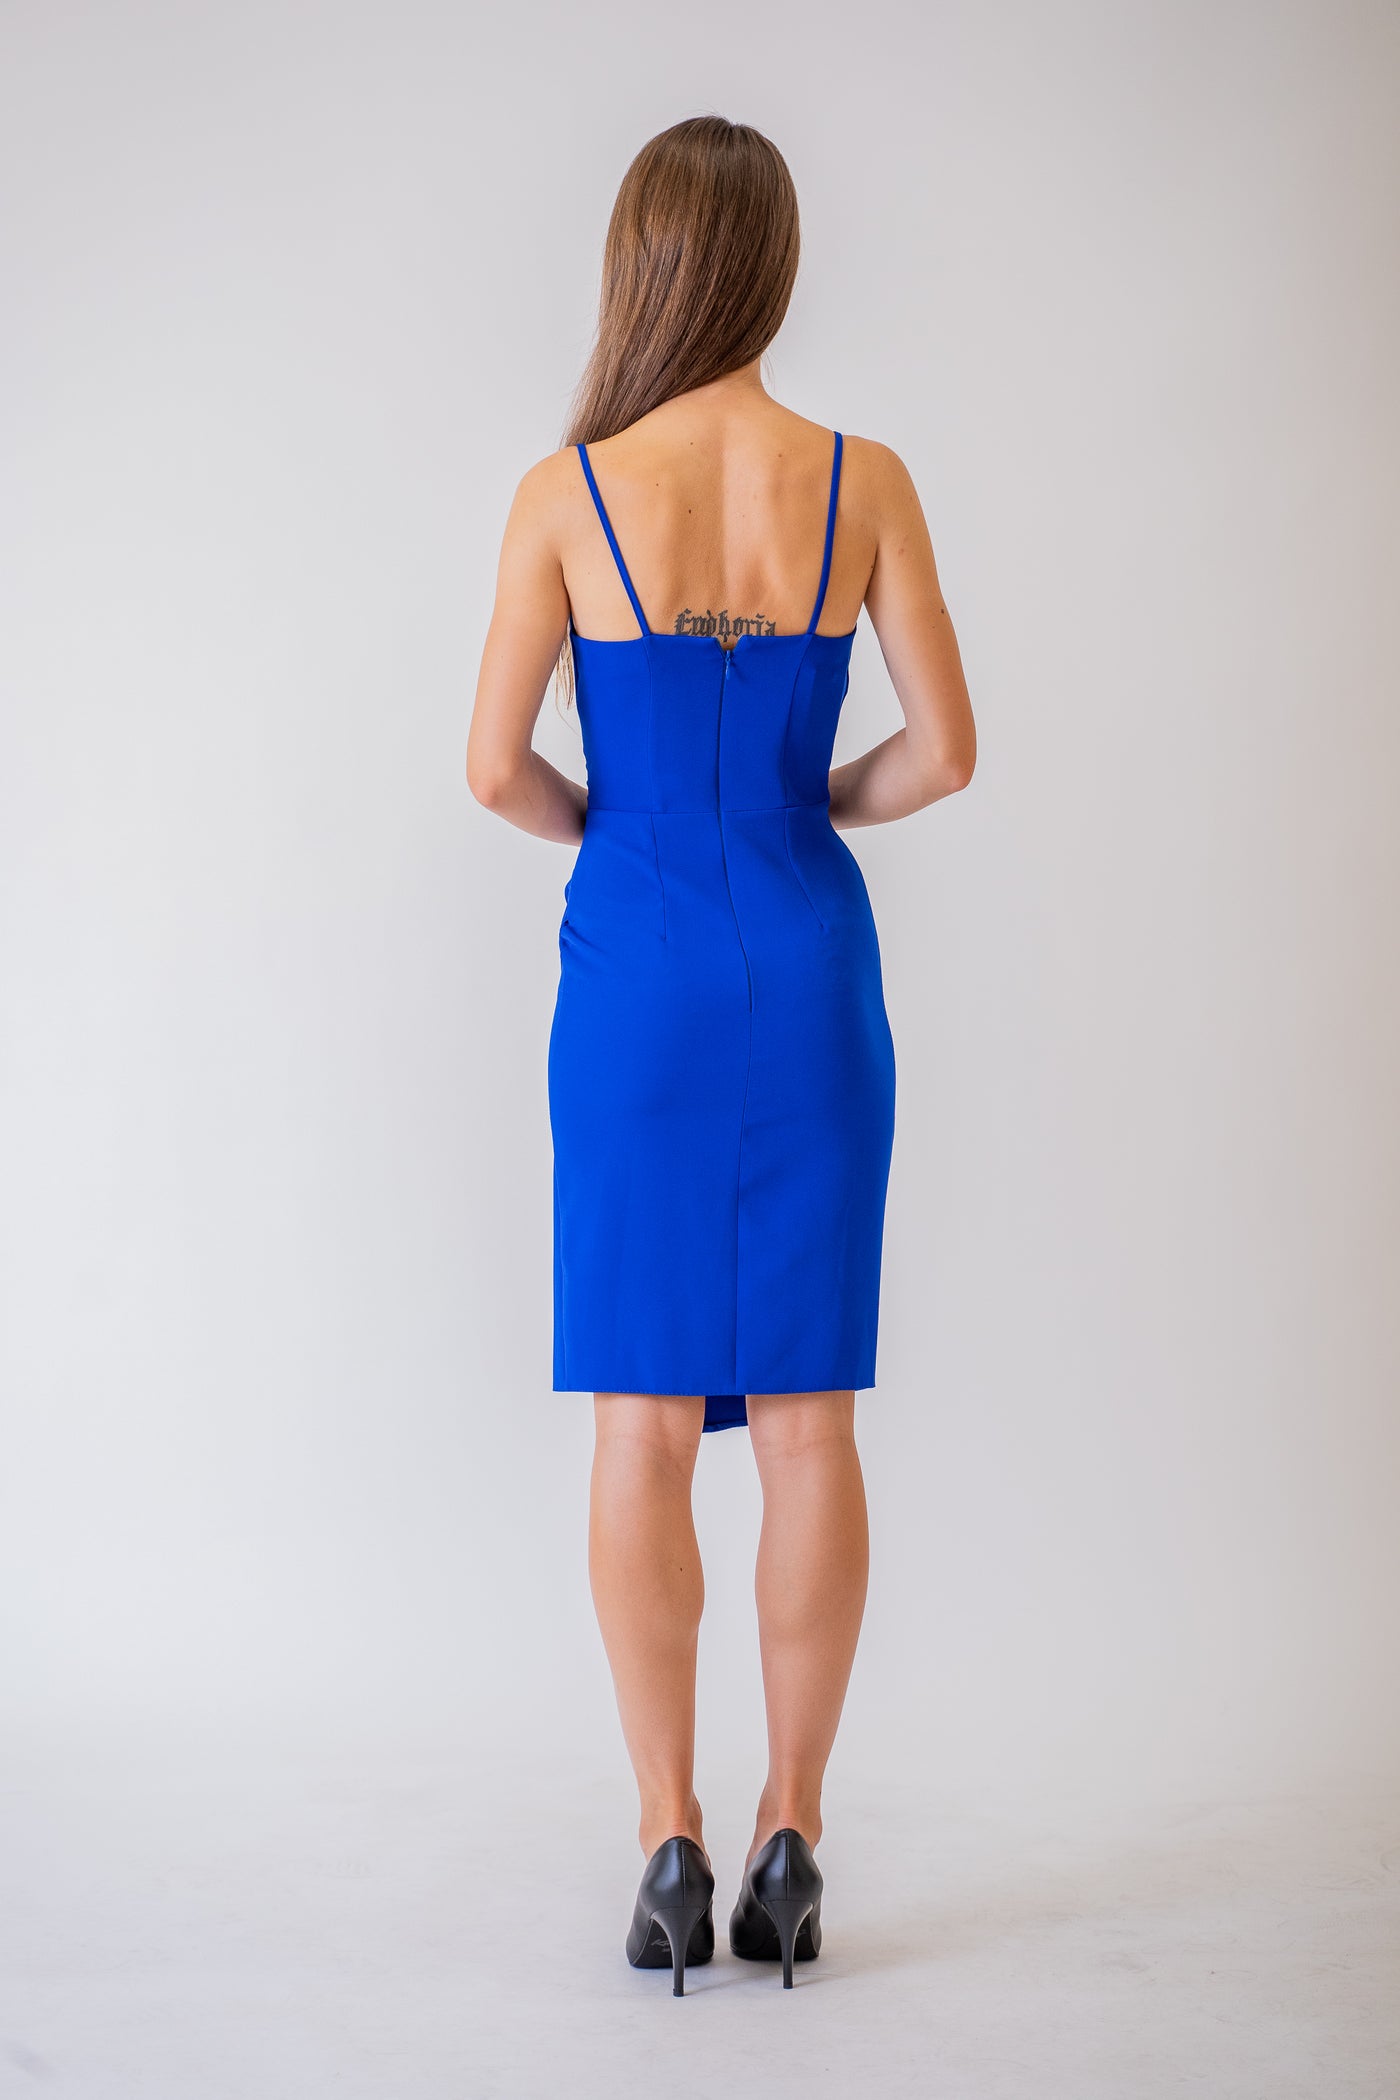 Modré krátke puzdrové šaty - spoločenské šaty